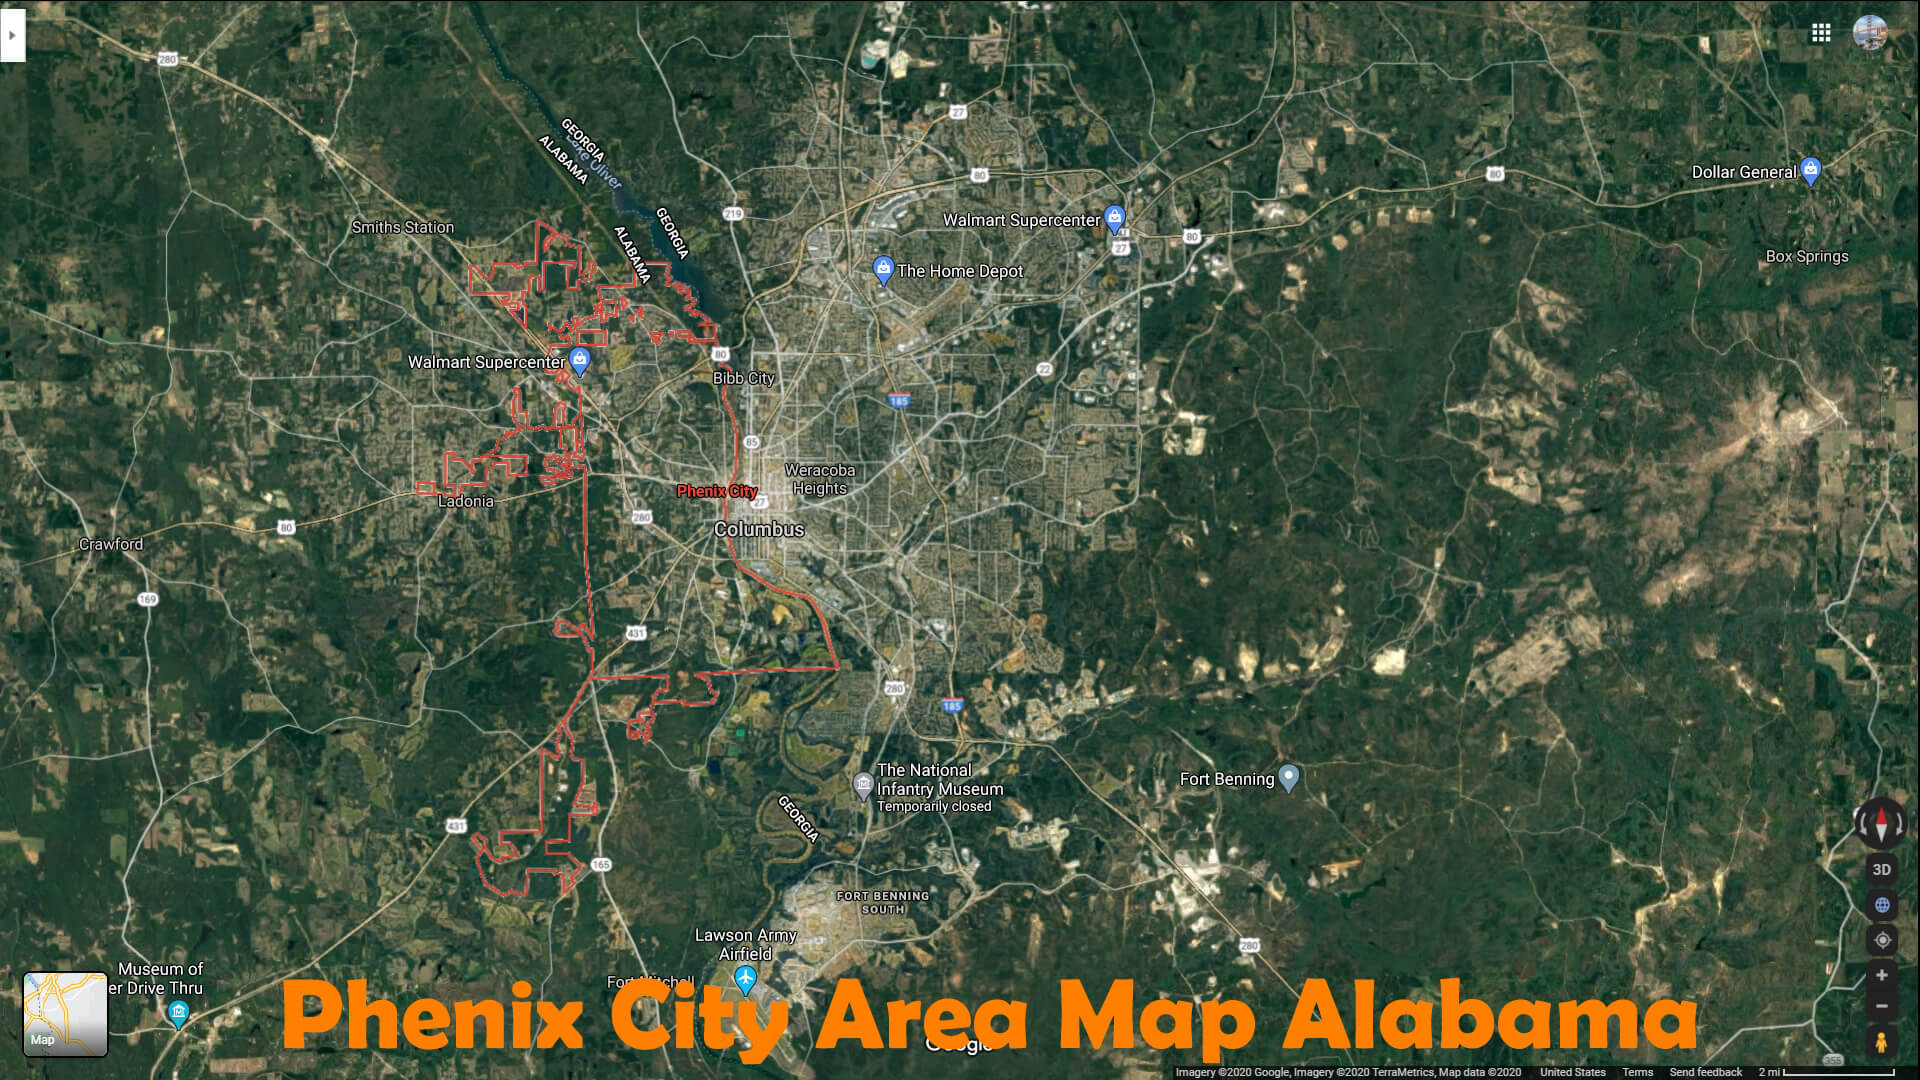 Phenix City Area Map Alabama